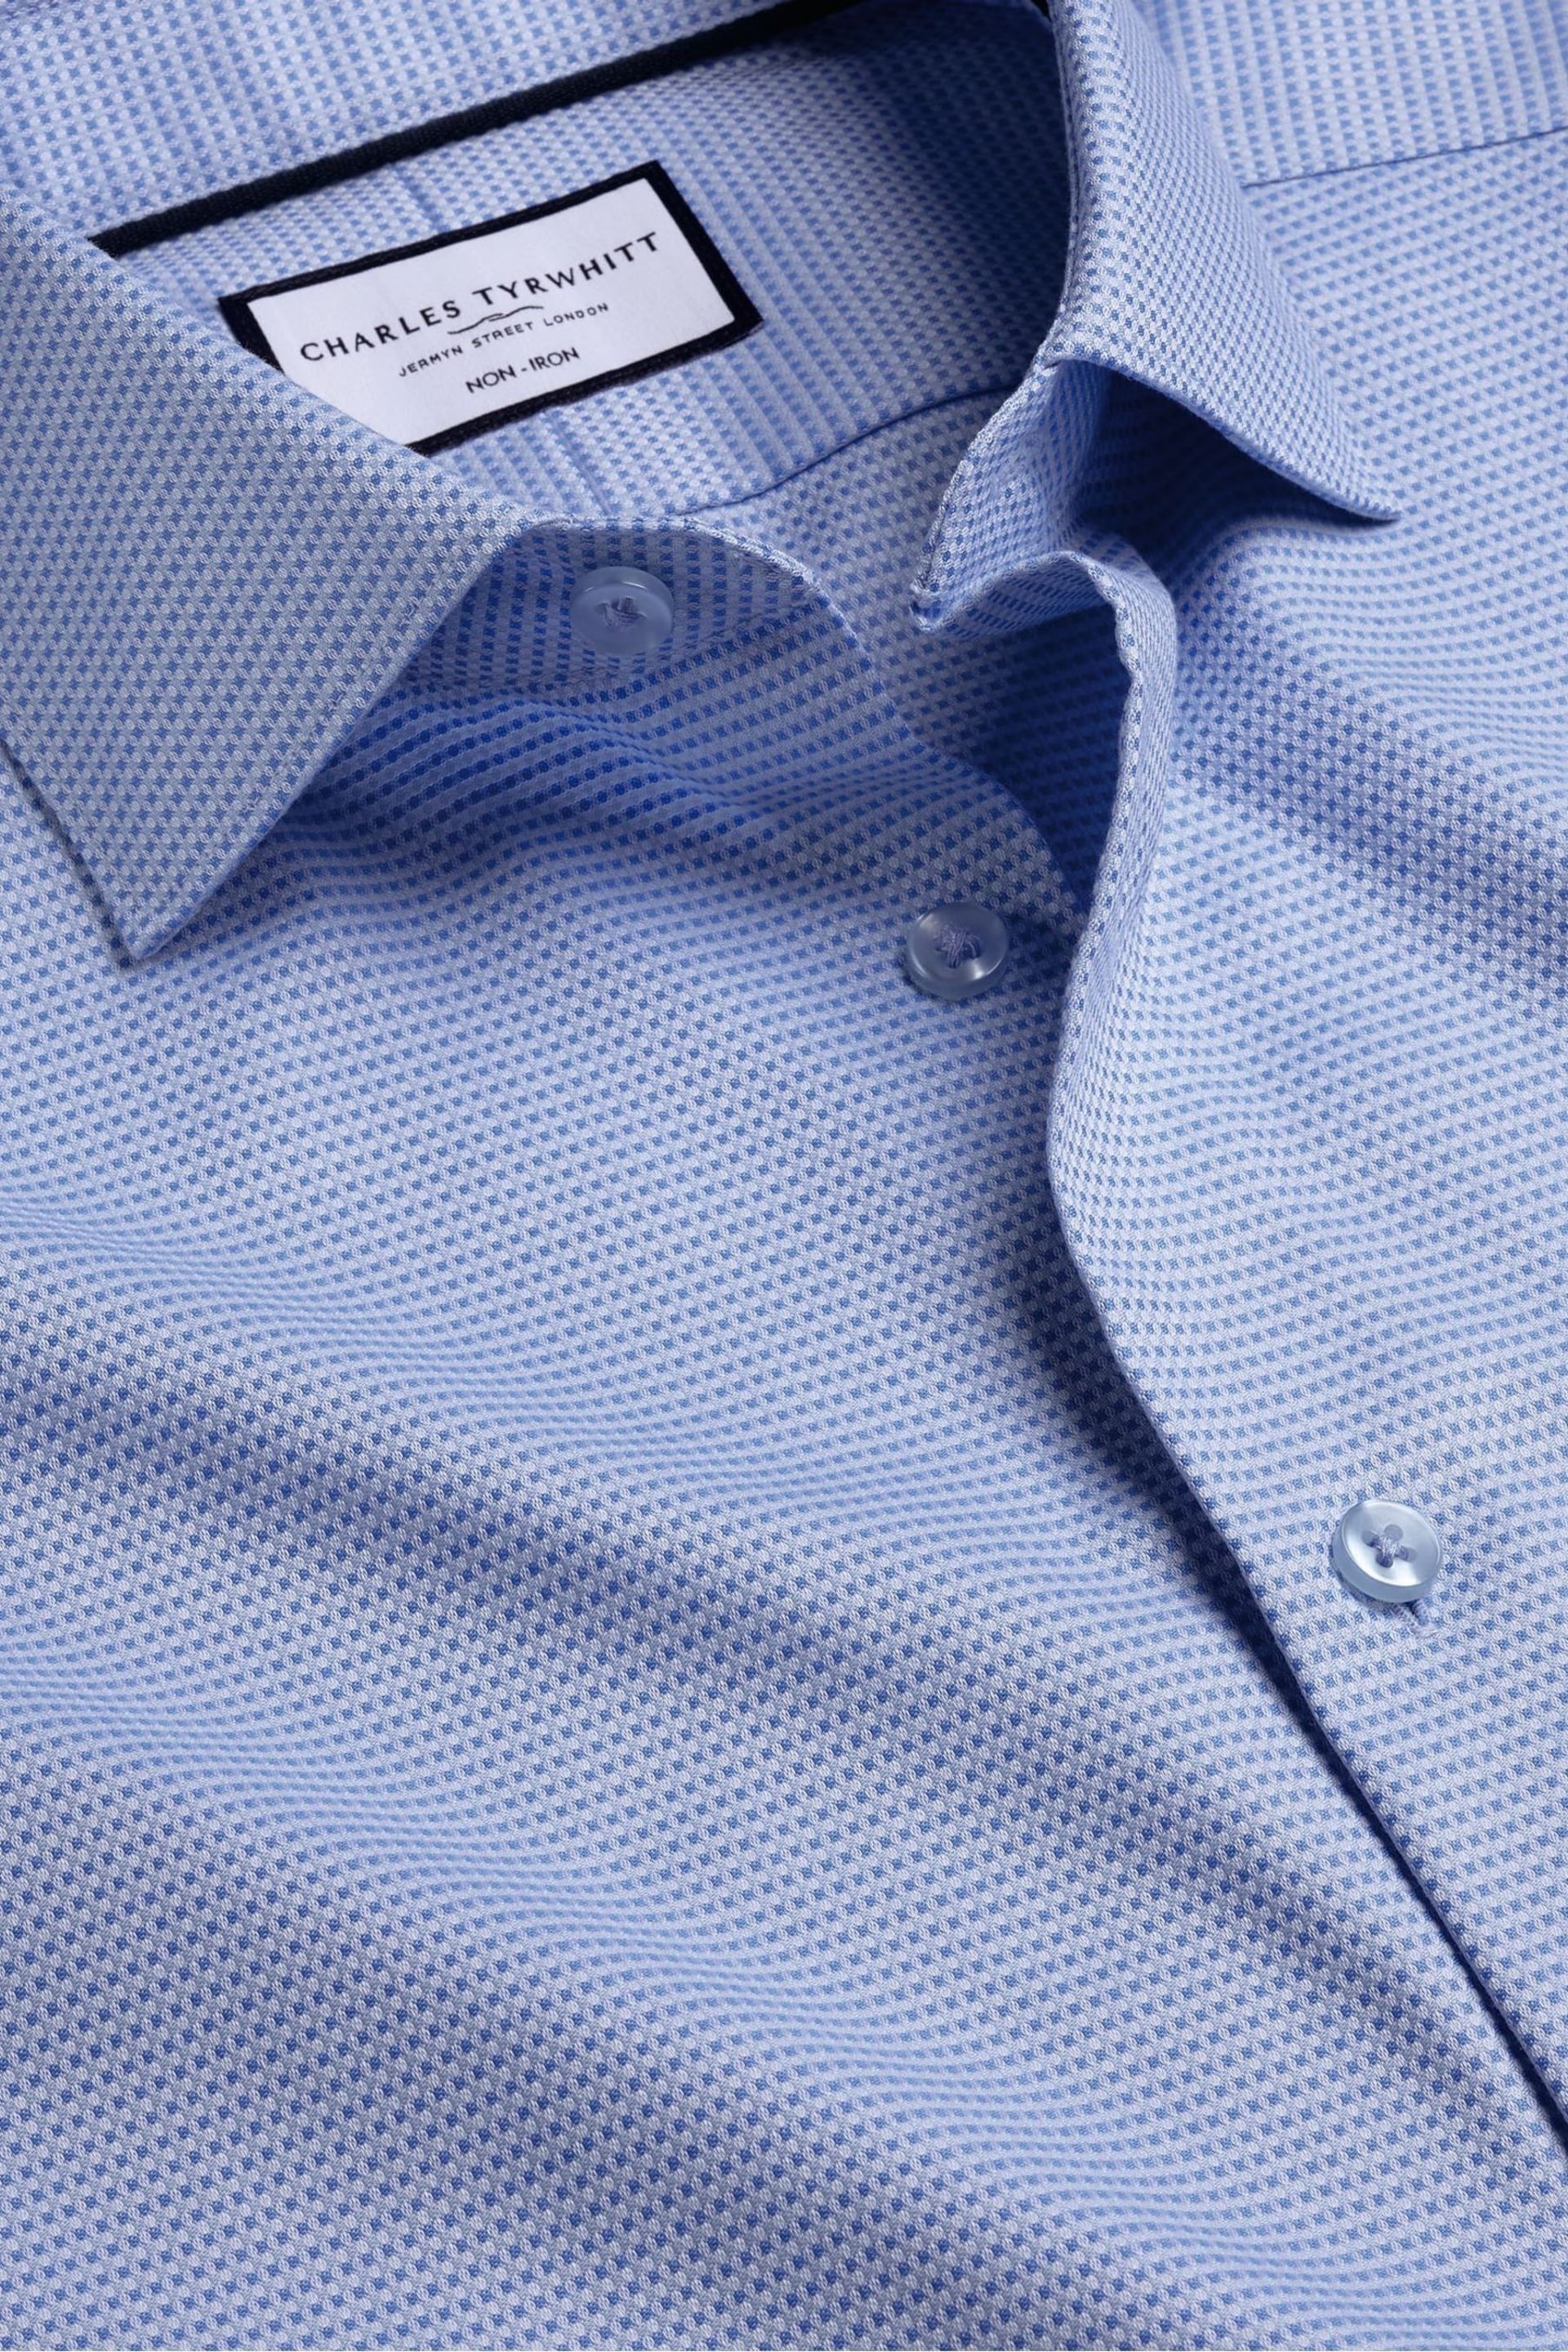 Charles Tyrwhitt Blue Non-iron Stretch Texture Slim Fit Shirt - Image 5 of 6